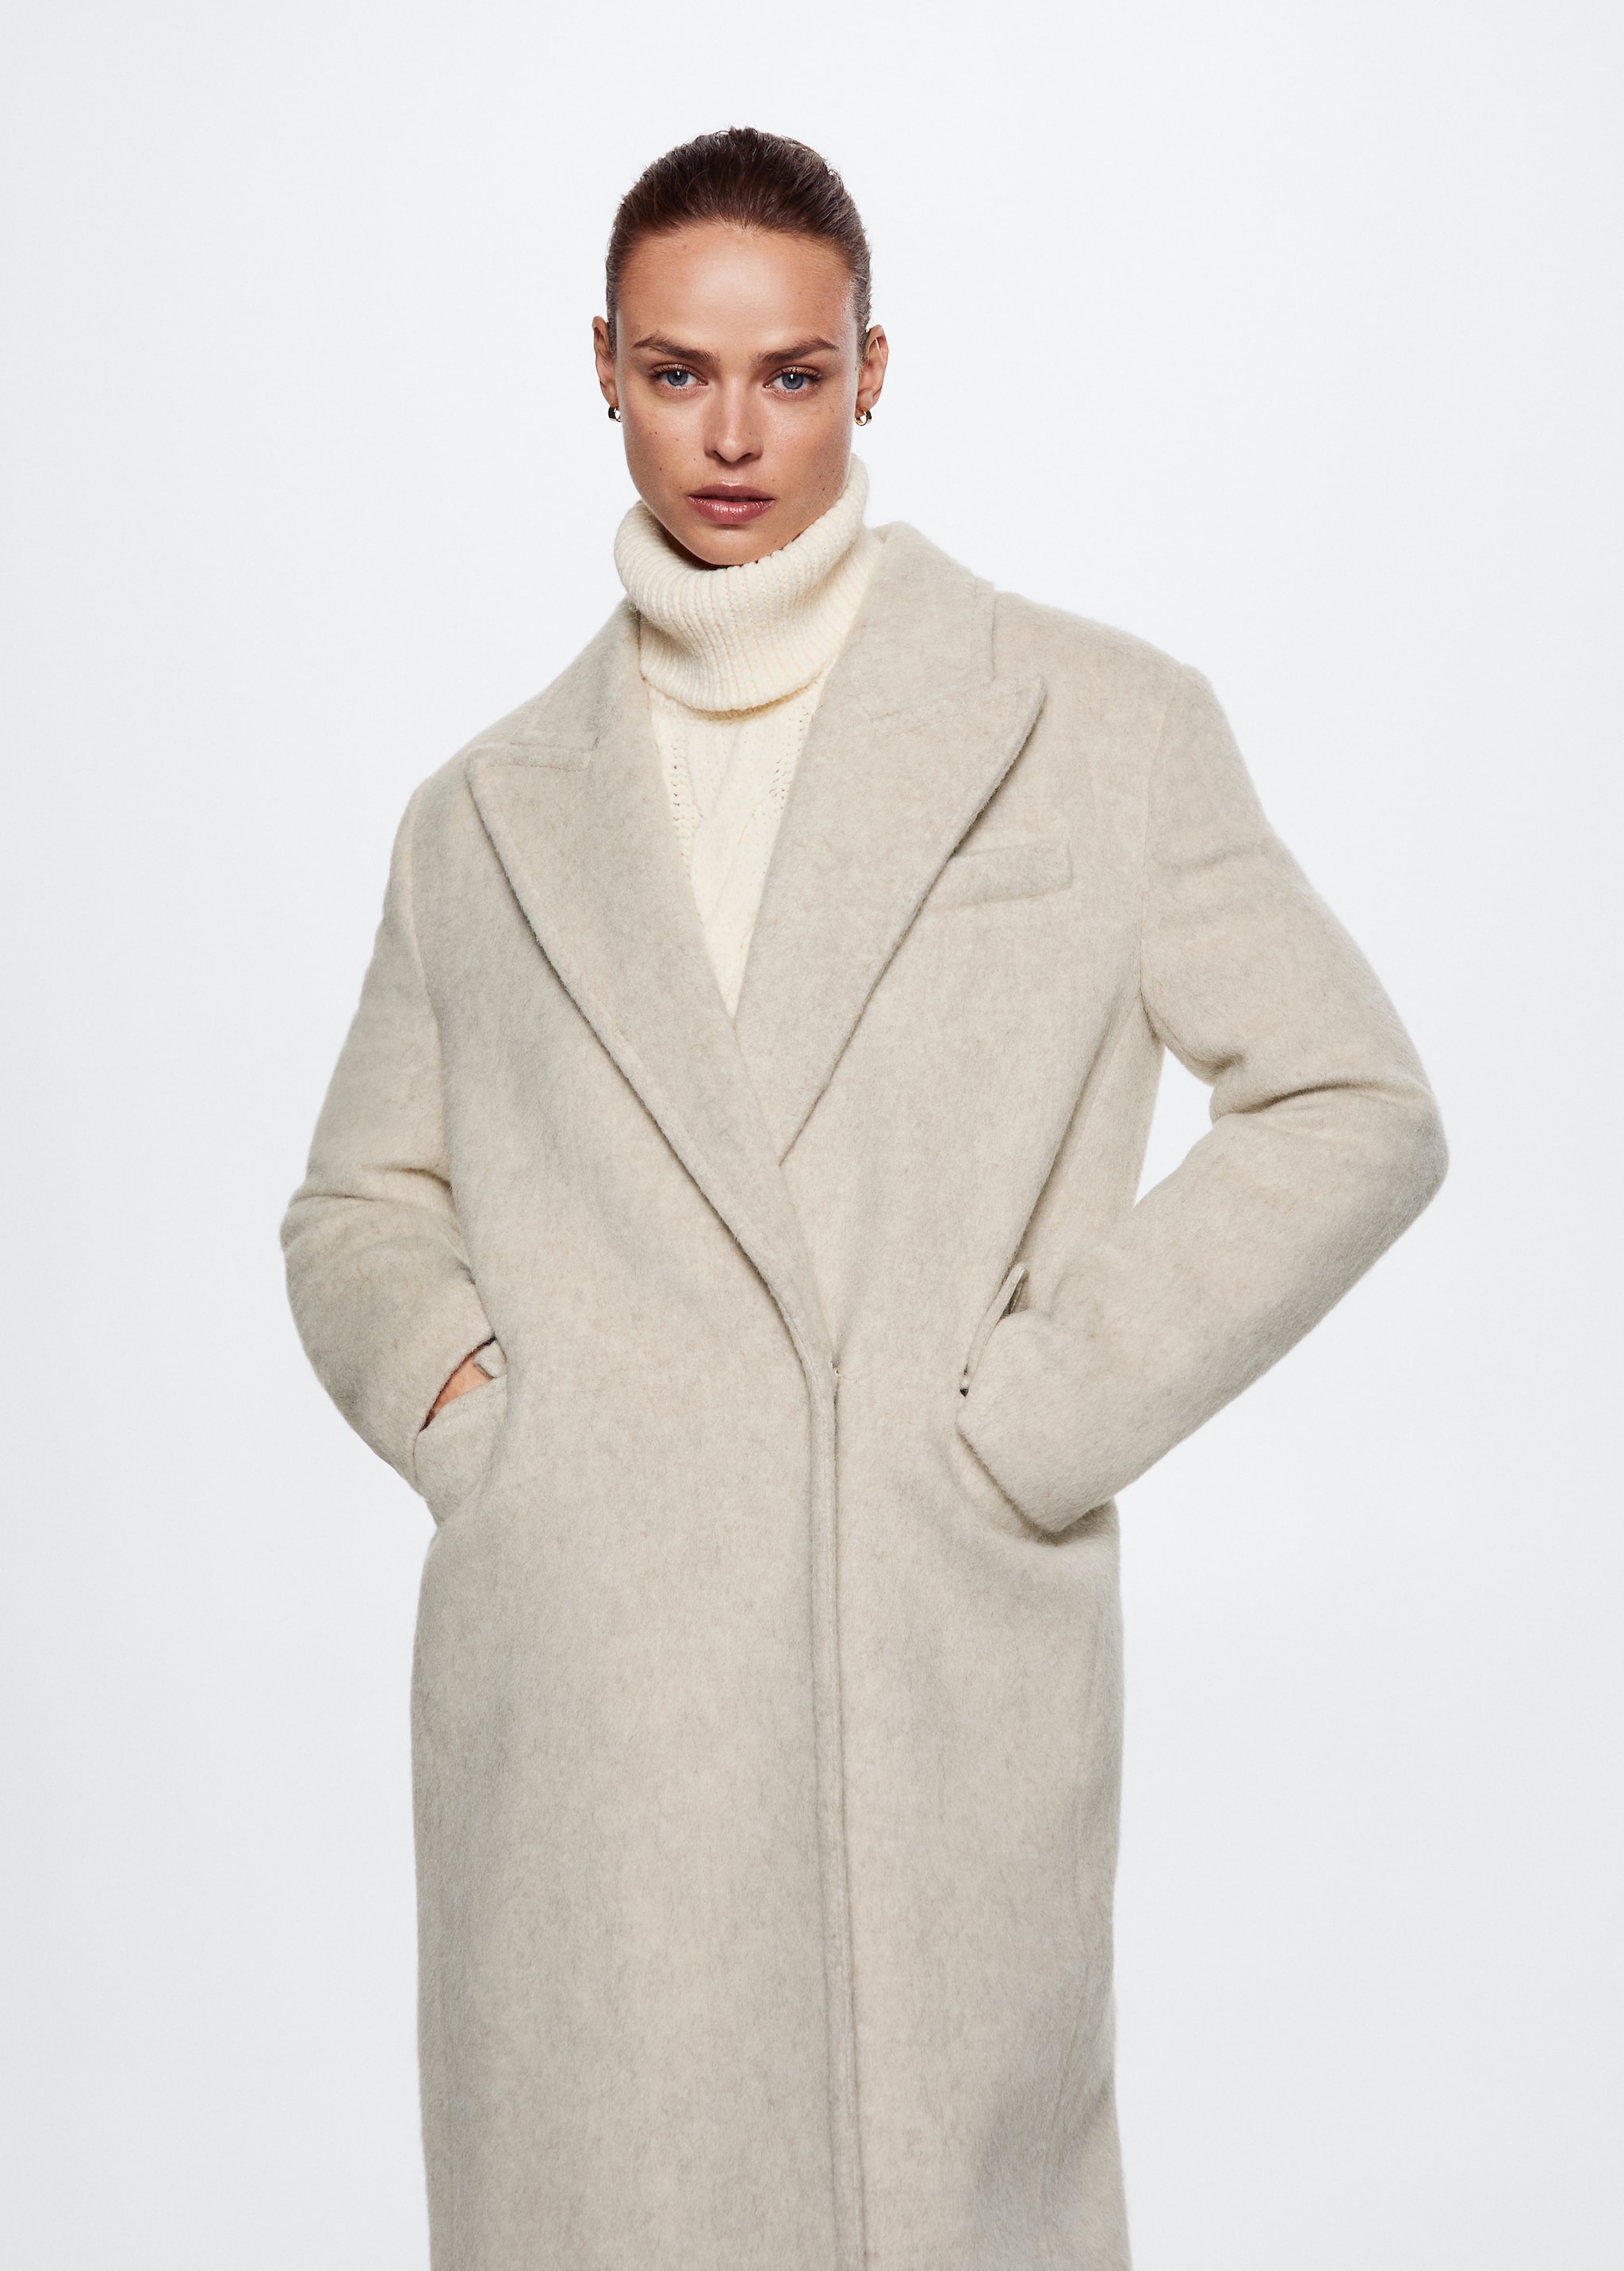 Fur-effect wool coat  - Medium plane